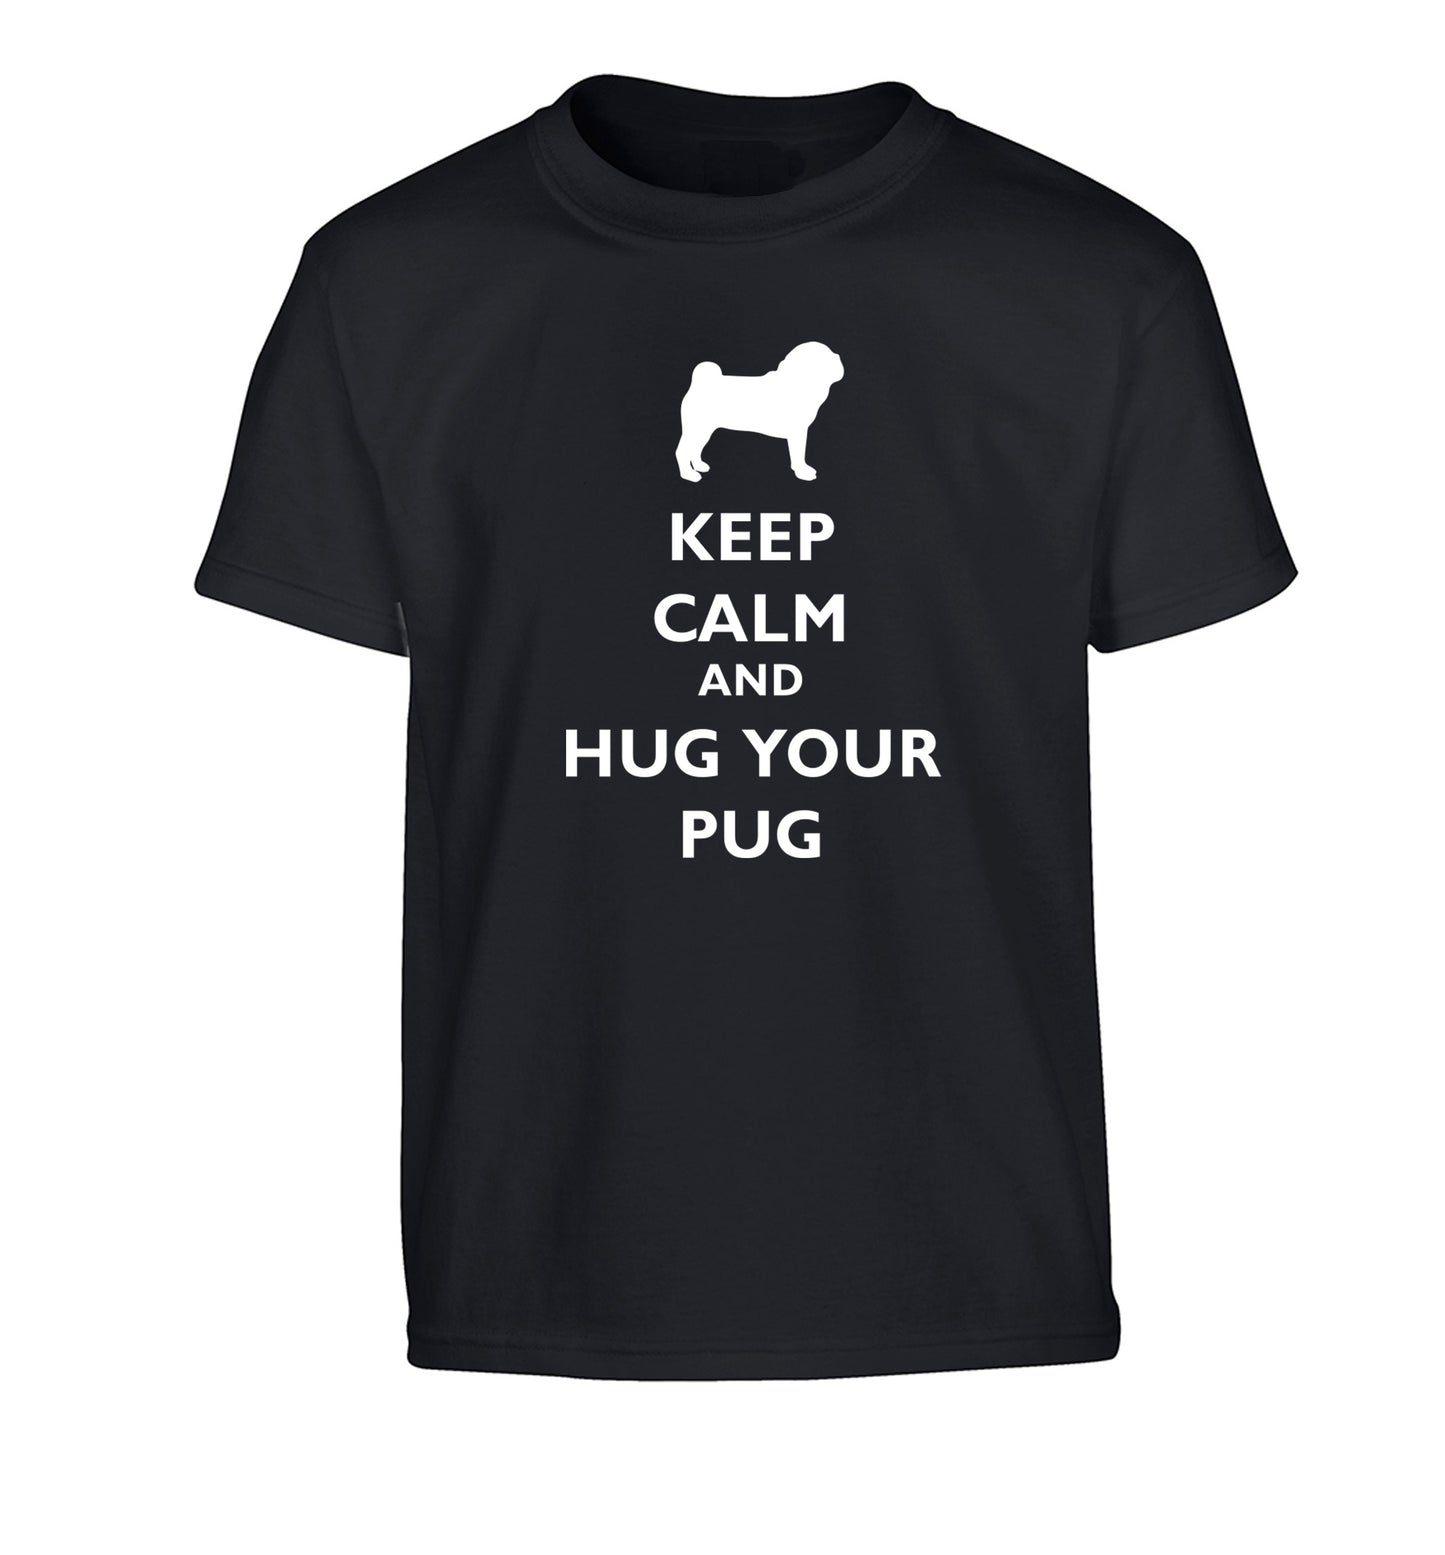 Keep calm and hug your pug Children's black Tshirt 12-13 Years